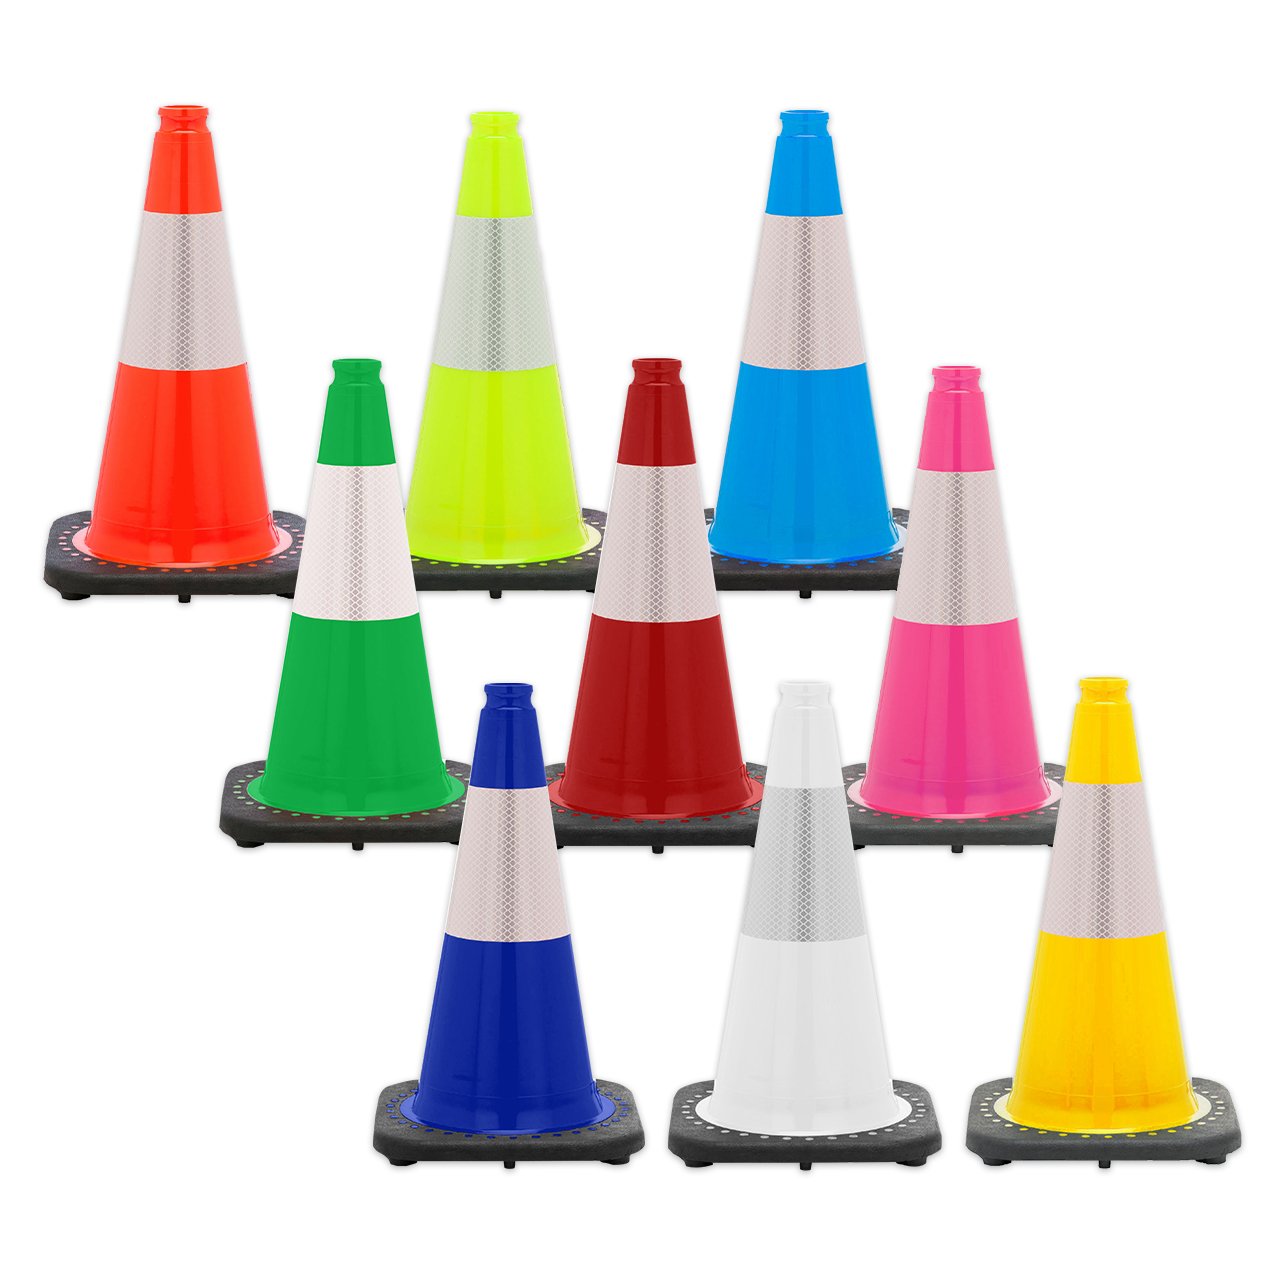 18 Inch Traffic Safety Cones with Reflective Collars,Orange Hazard